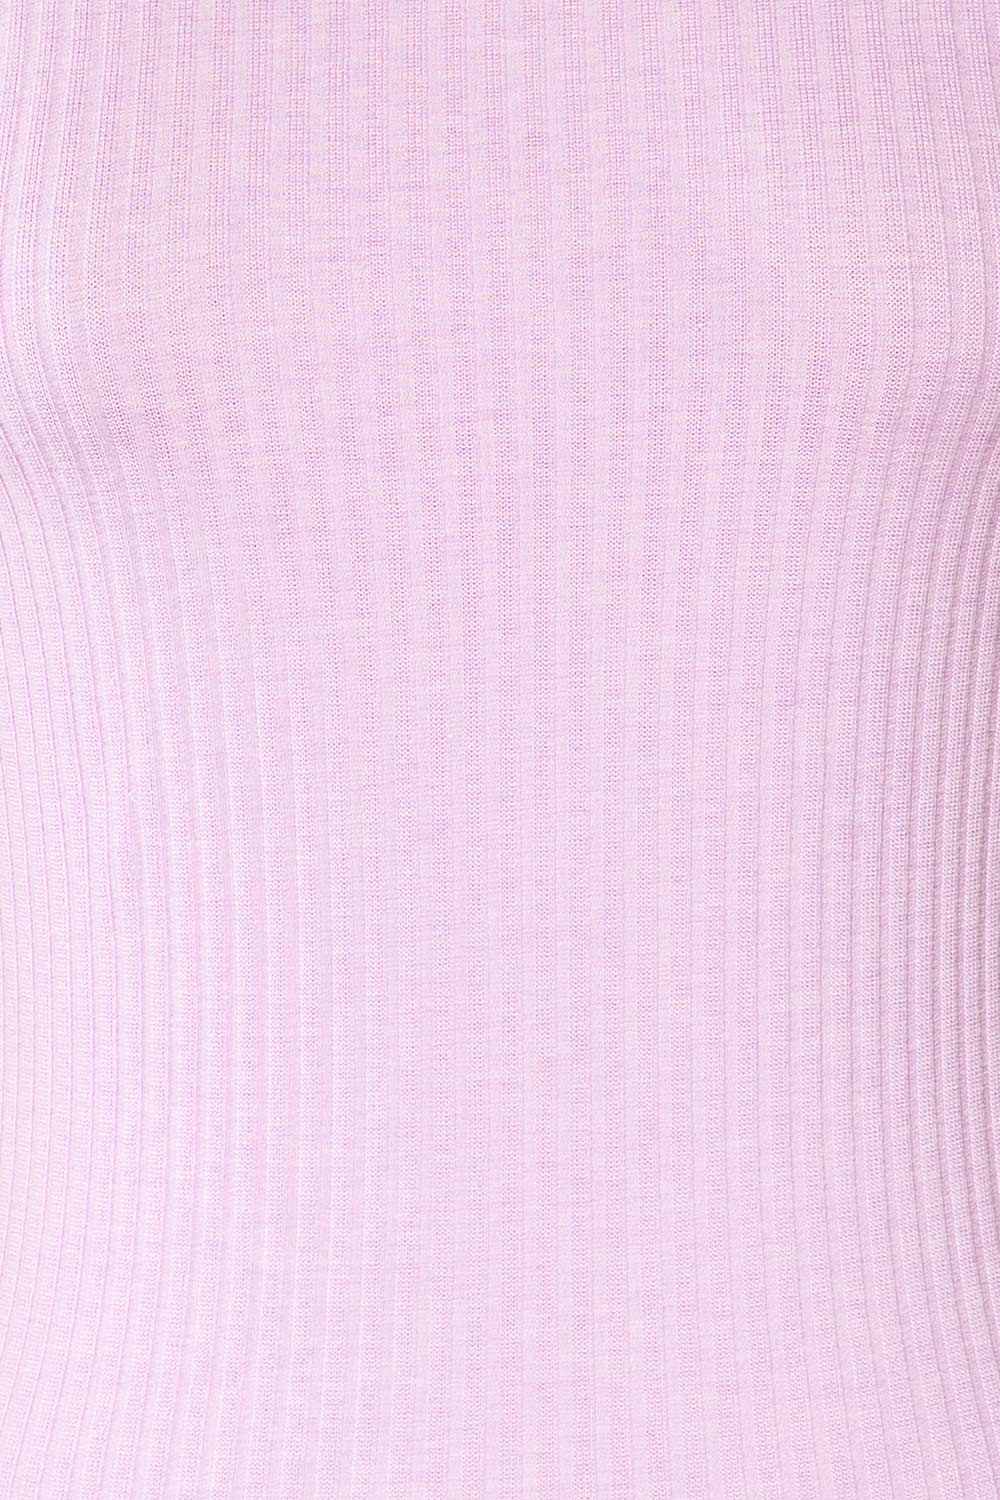 Loula Lilac Ribbed Frill-Trimmed Crop Top | La petite garçonne fabric